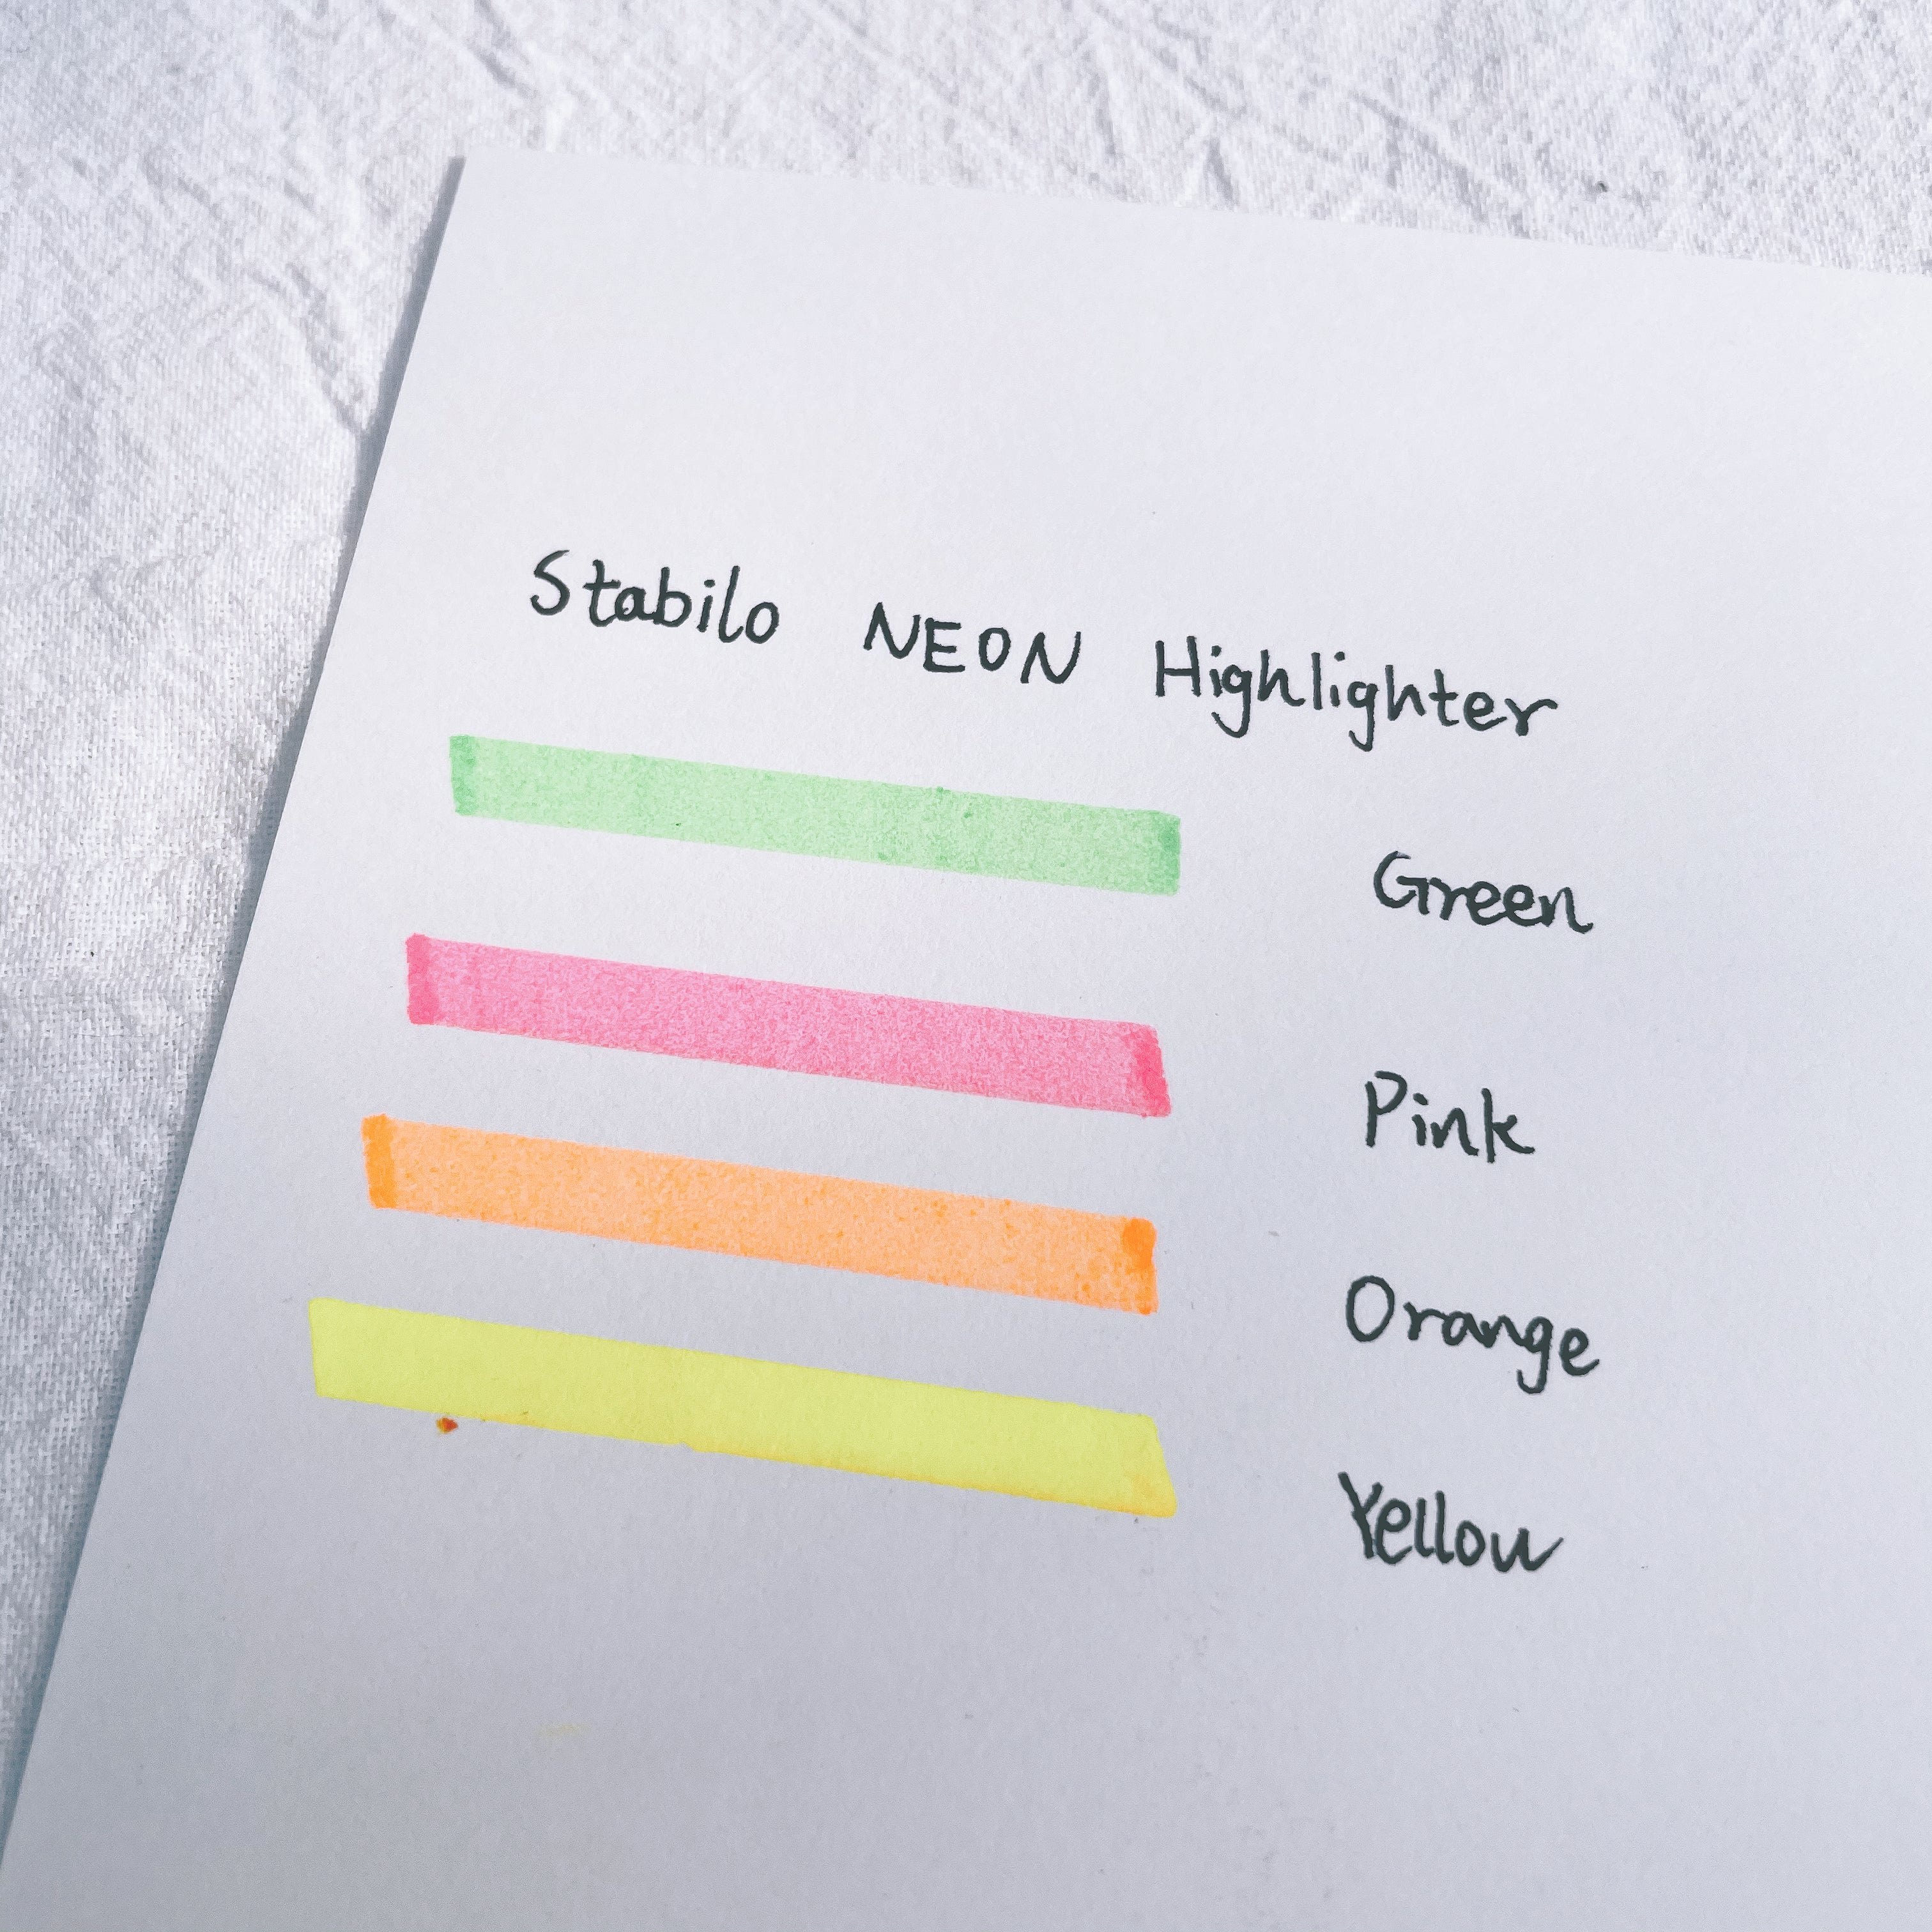 Stabilo Neon Highlighter - Green